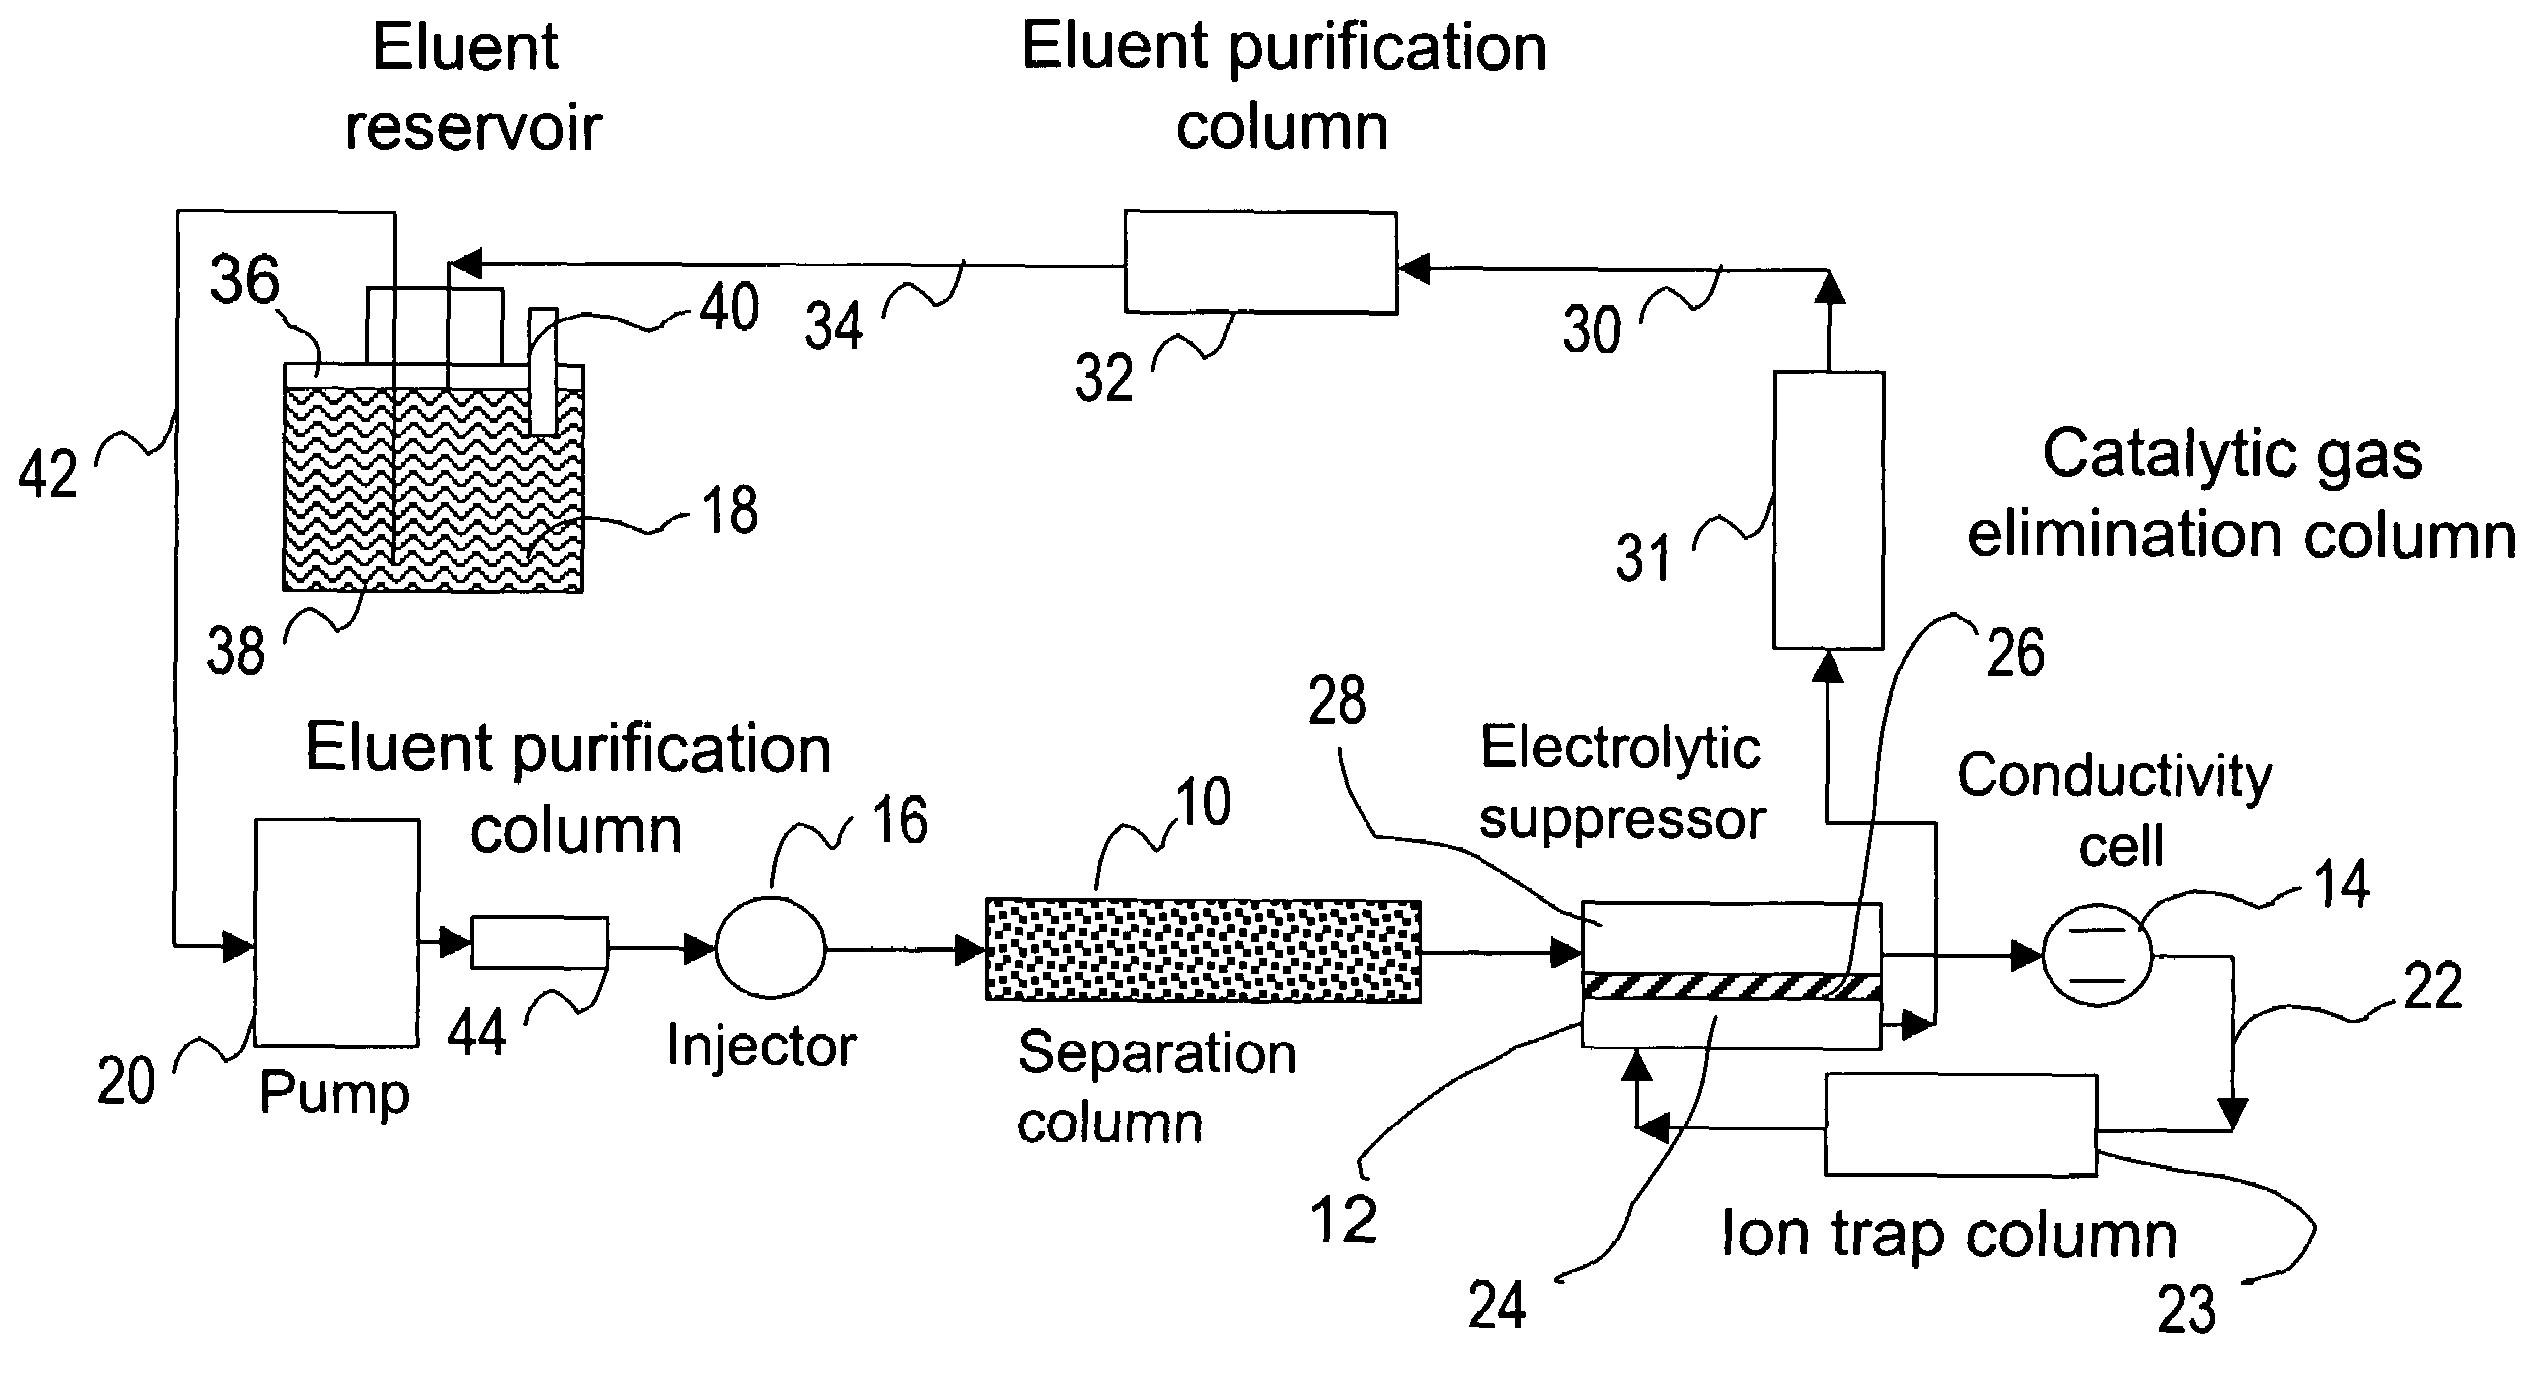 Ion chromatography system using catalytic gas elimination